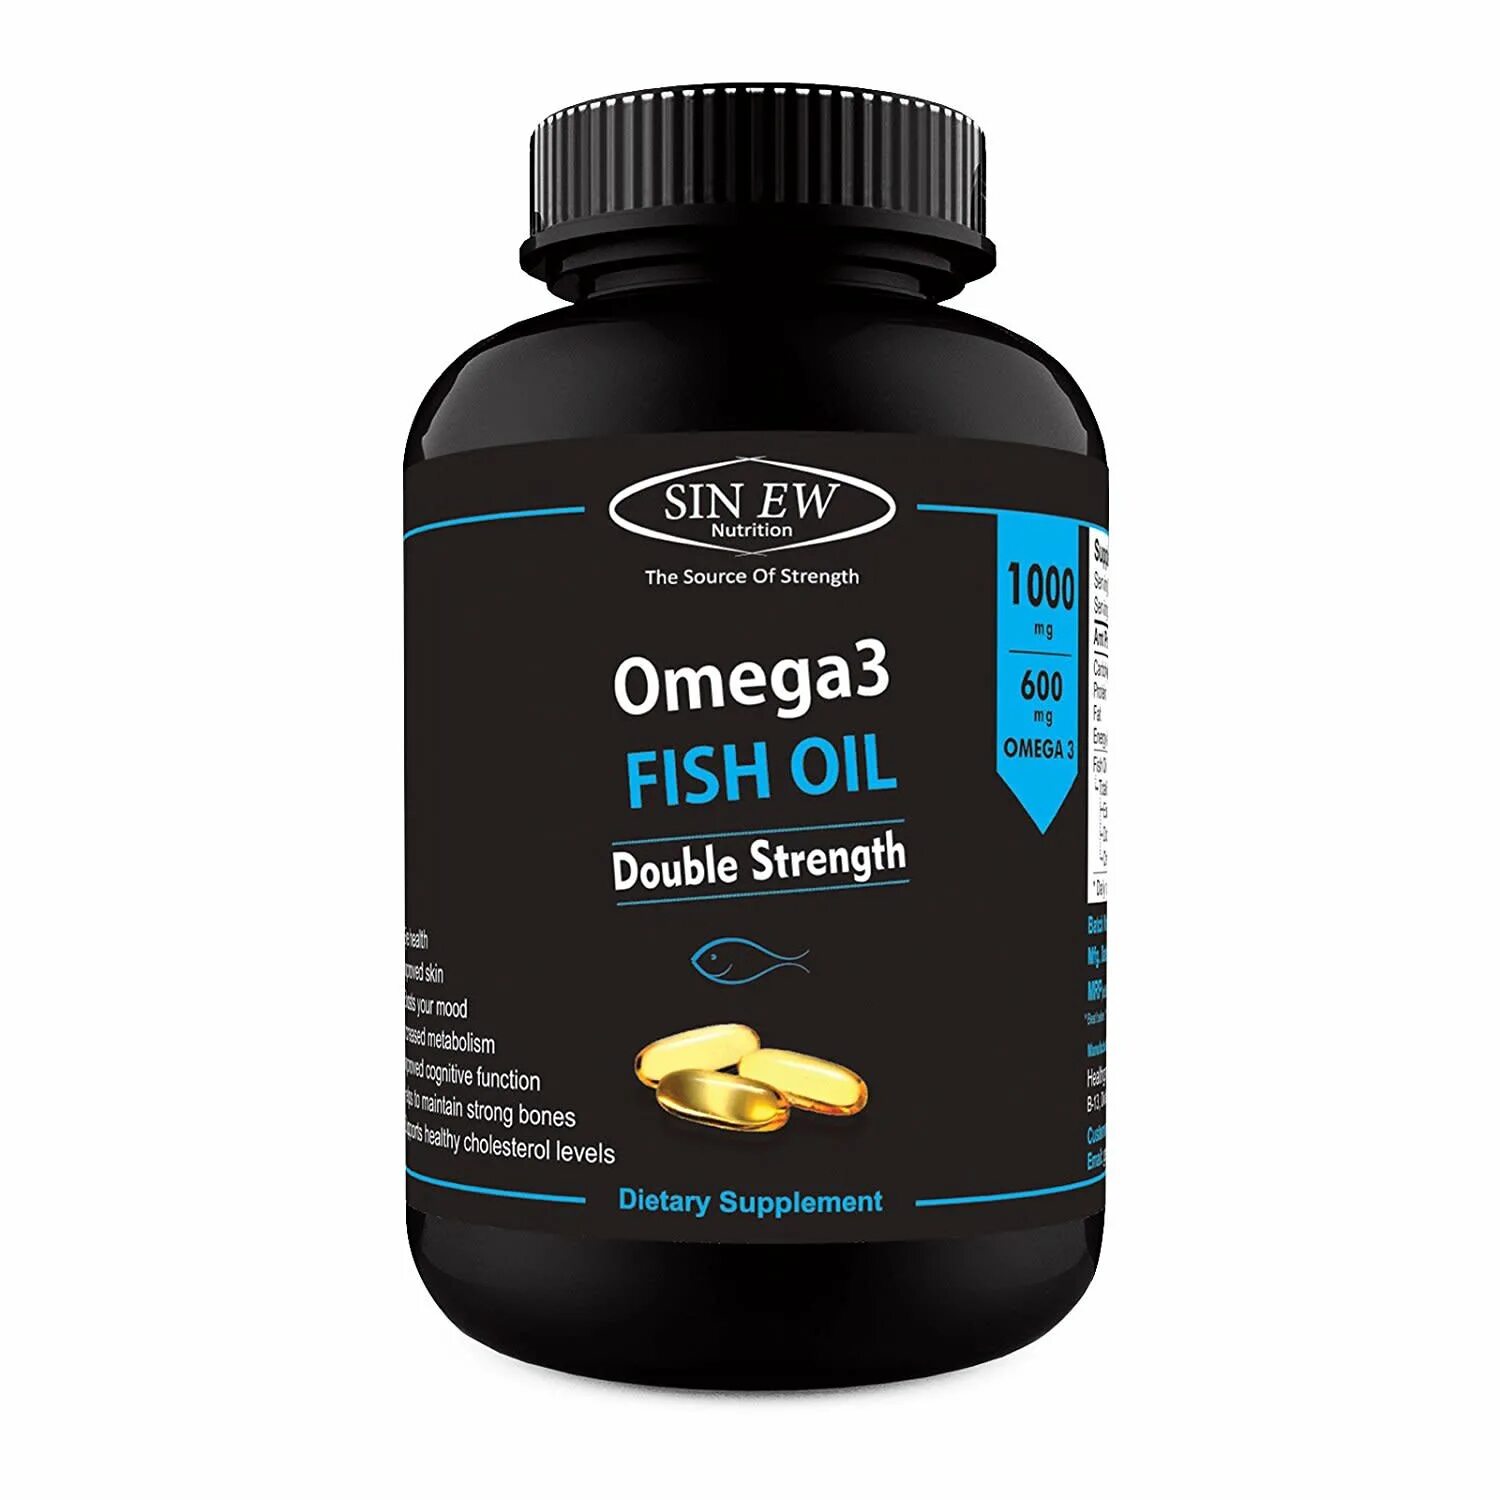 Omega-3 Fish Oil. Fish Oil Omega Нутришн. Омега-3 Nutrition. Sports research Омега-3 Fish Oil 150 Fish Softgels. Масла омега отзывы